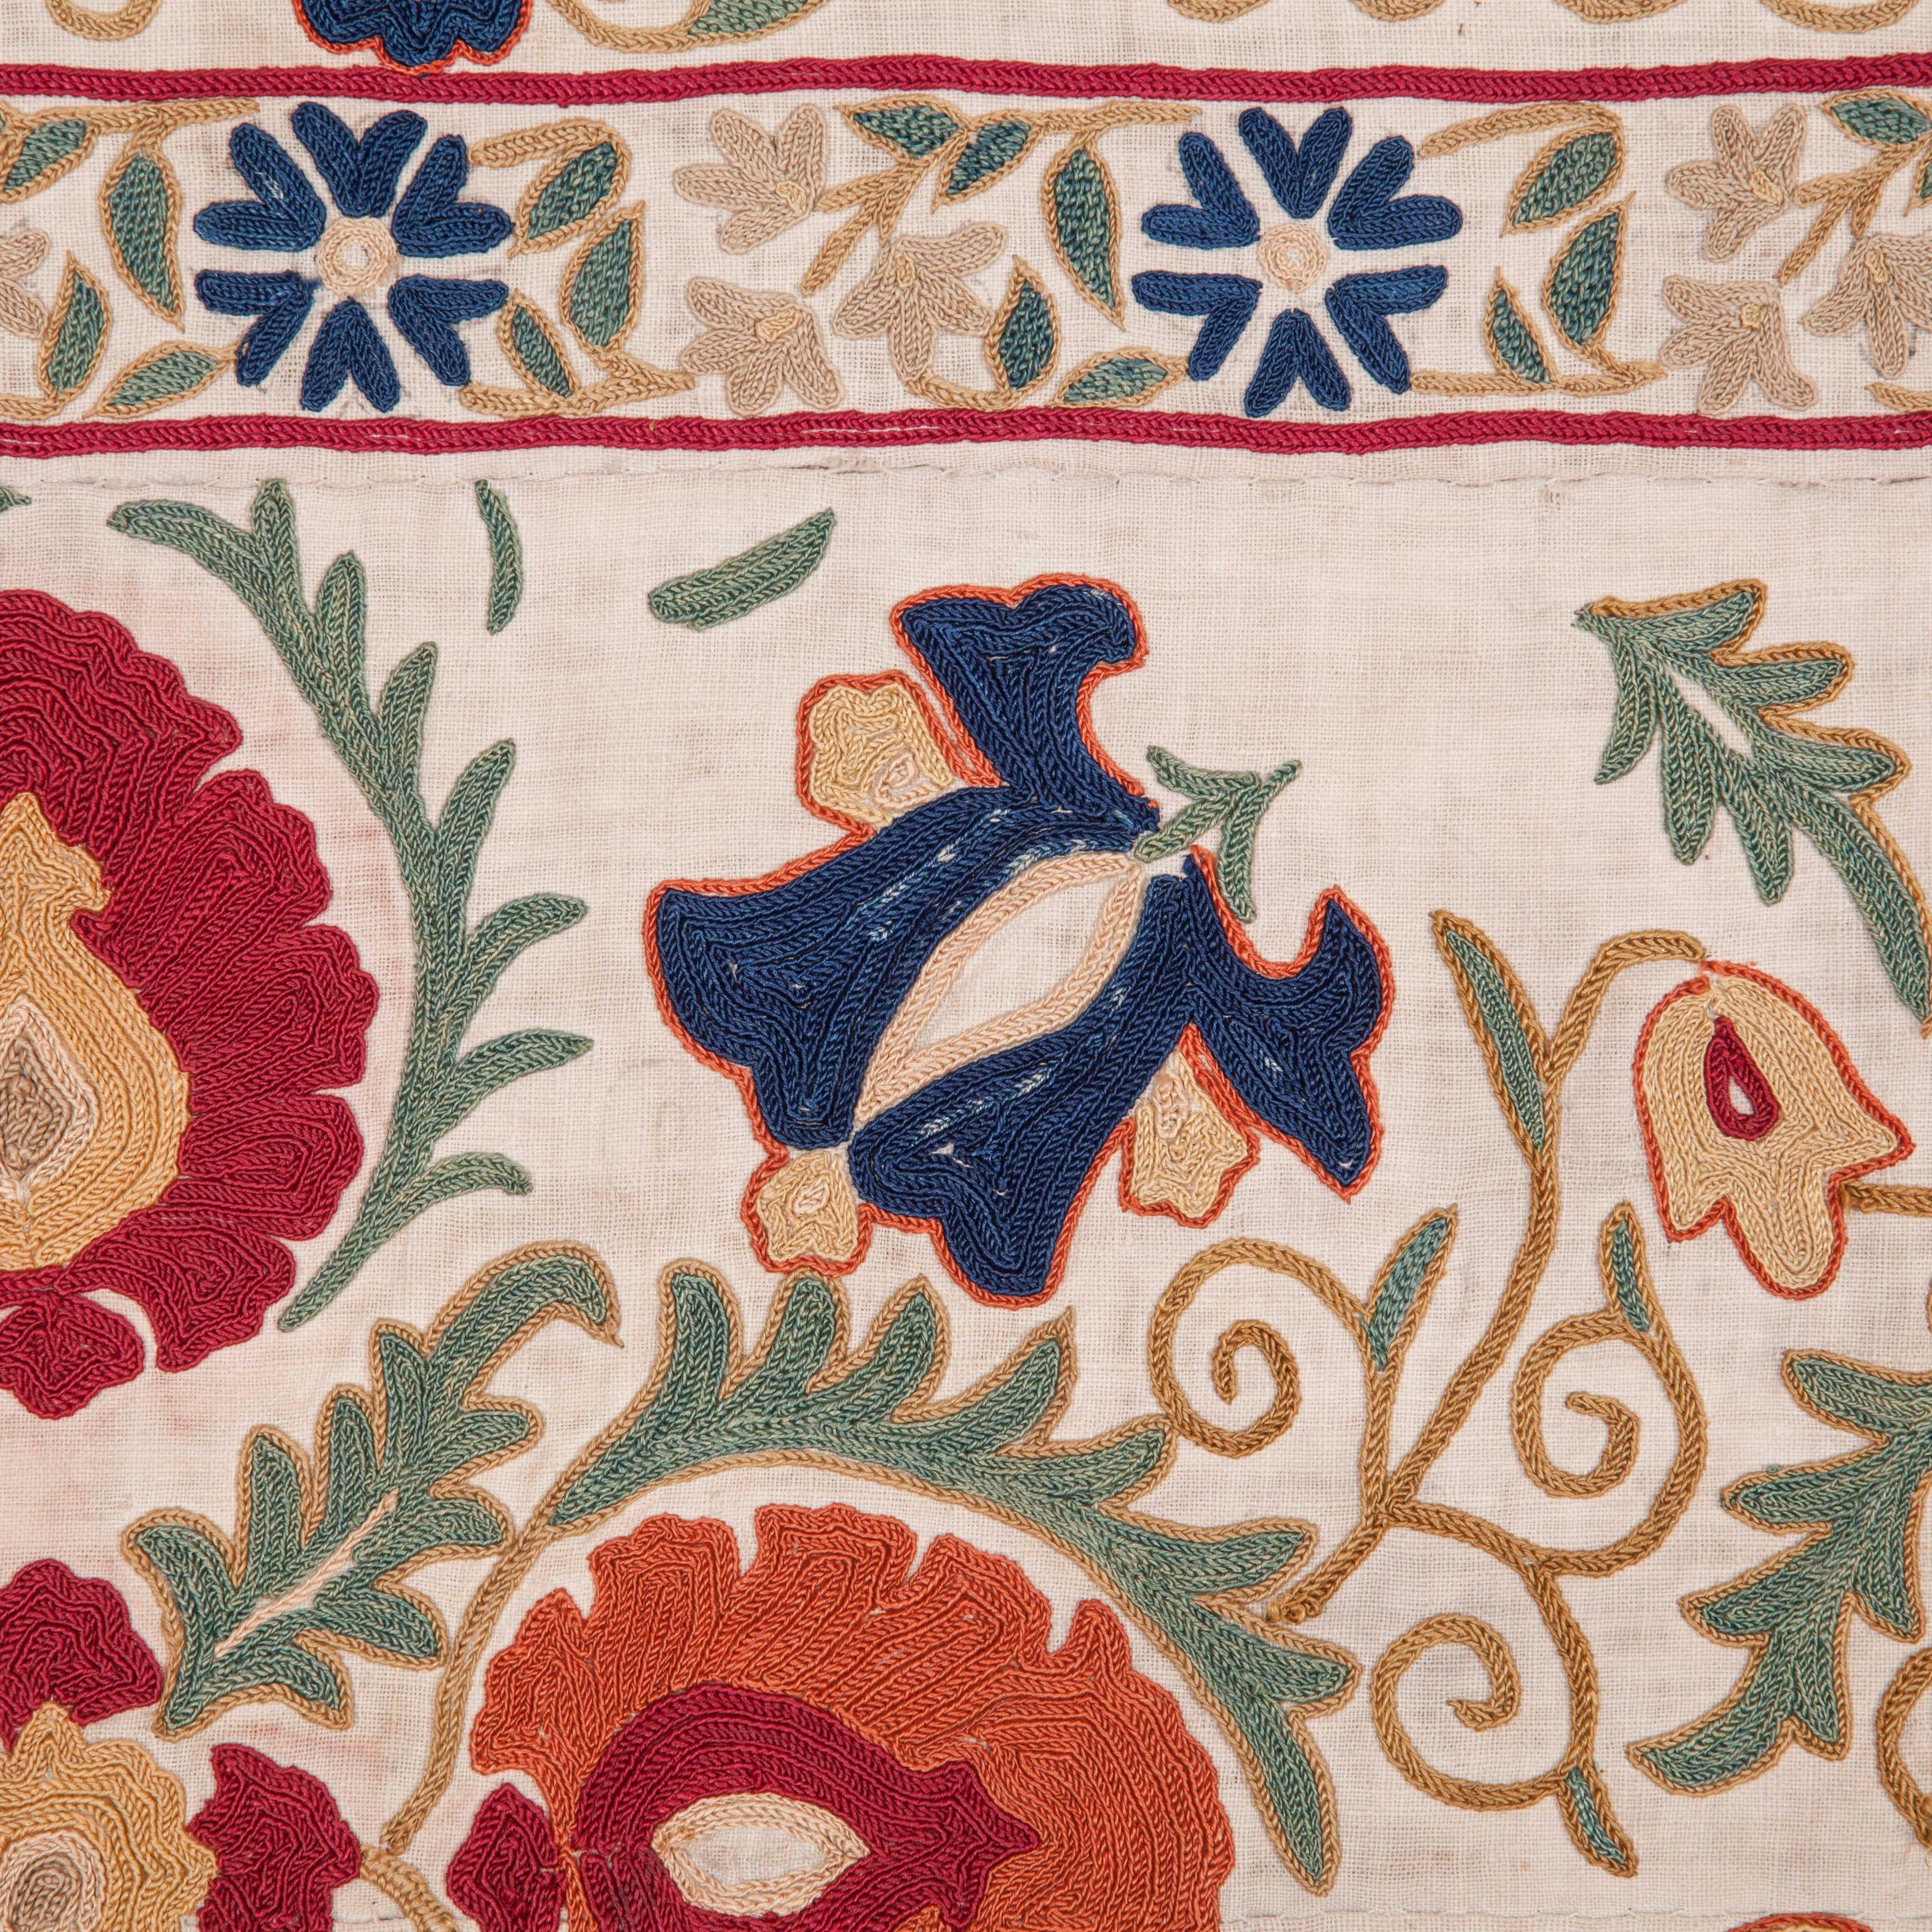 Embroidered Antique Suzani from Bukhara Uzbekistan, Late 19th Century